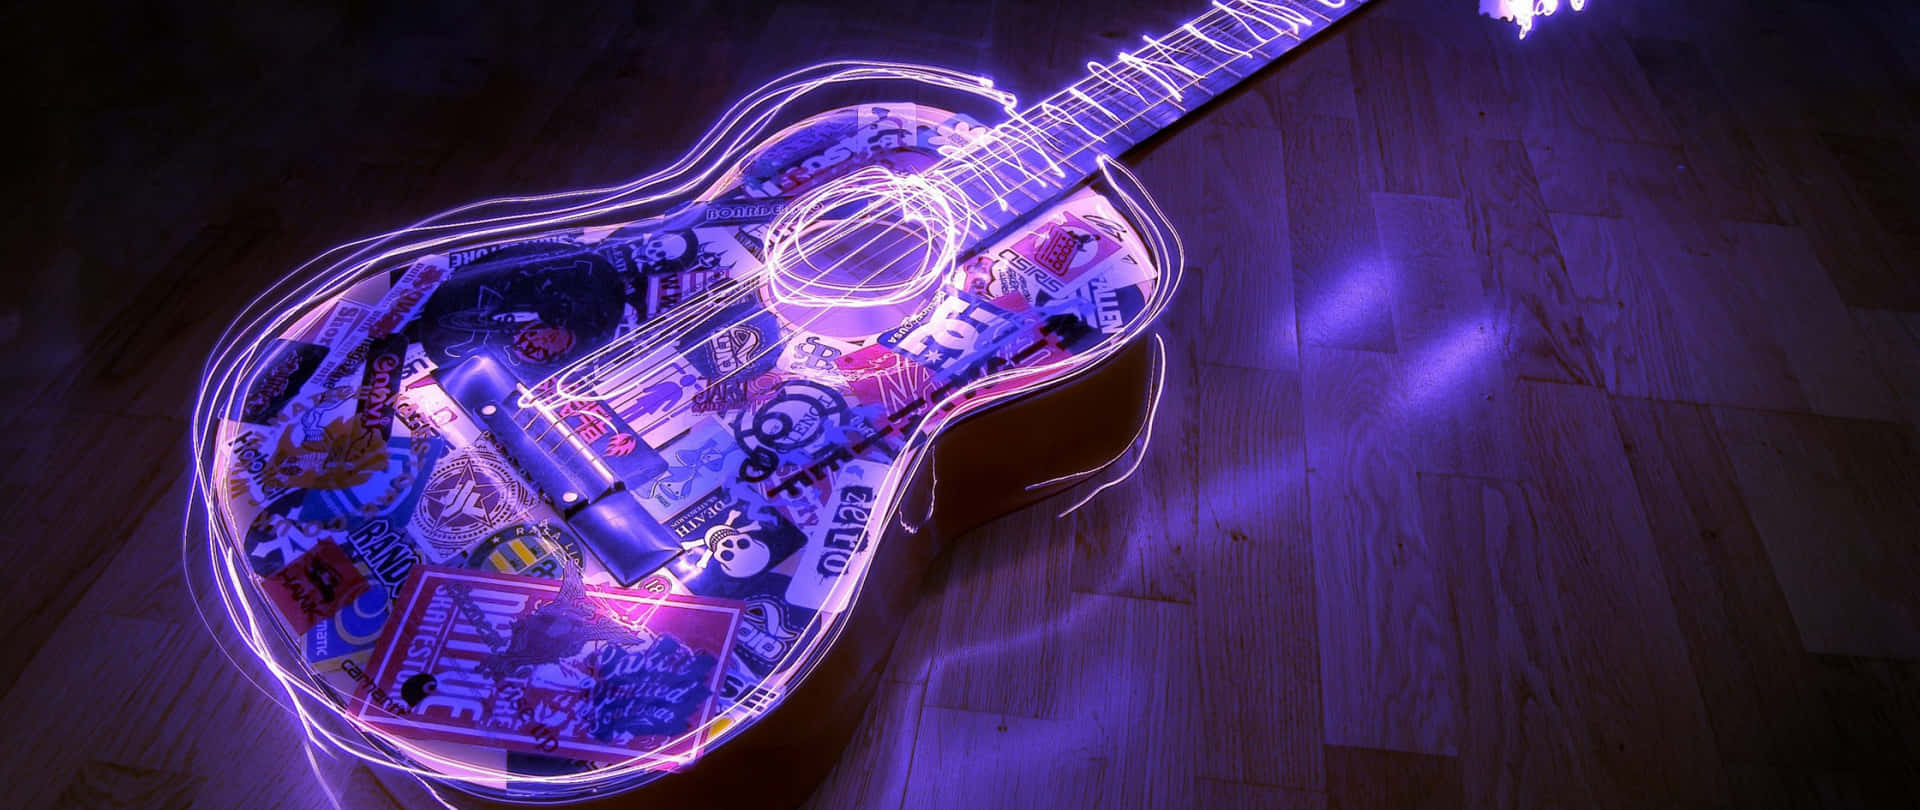 Lit Iphone Purple Guitar Wallpaper